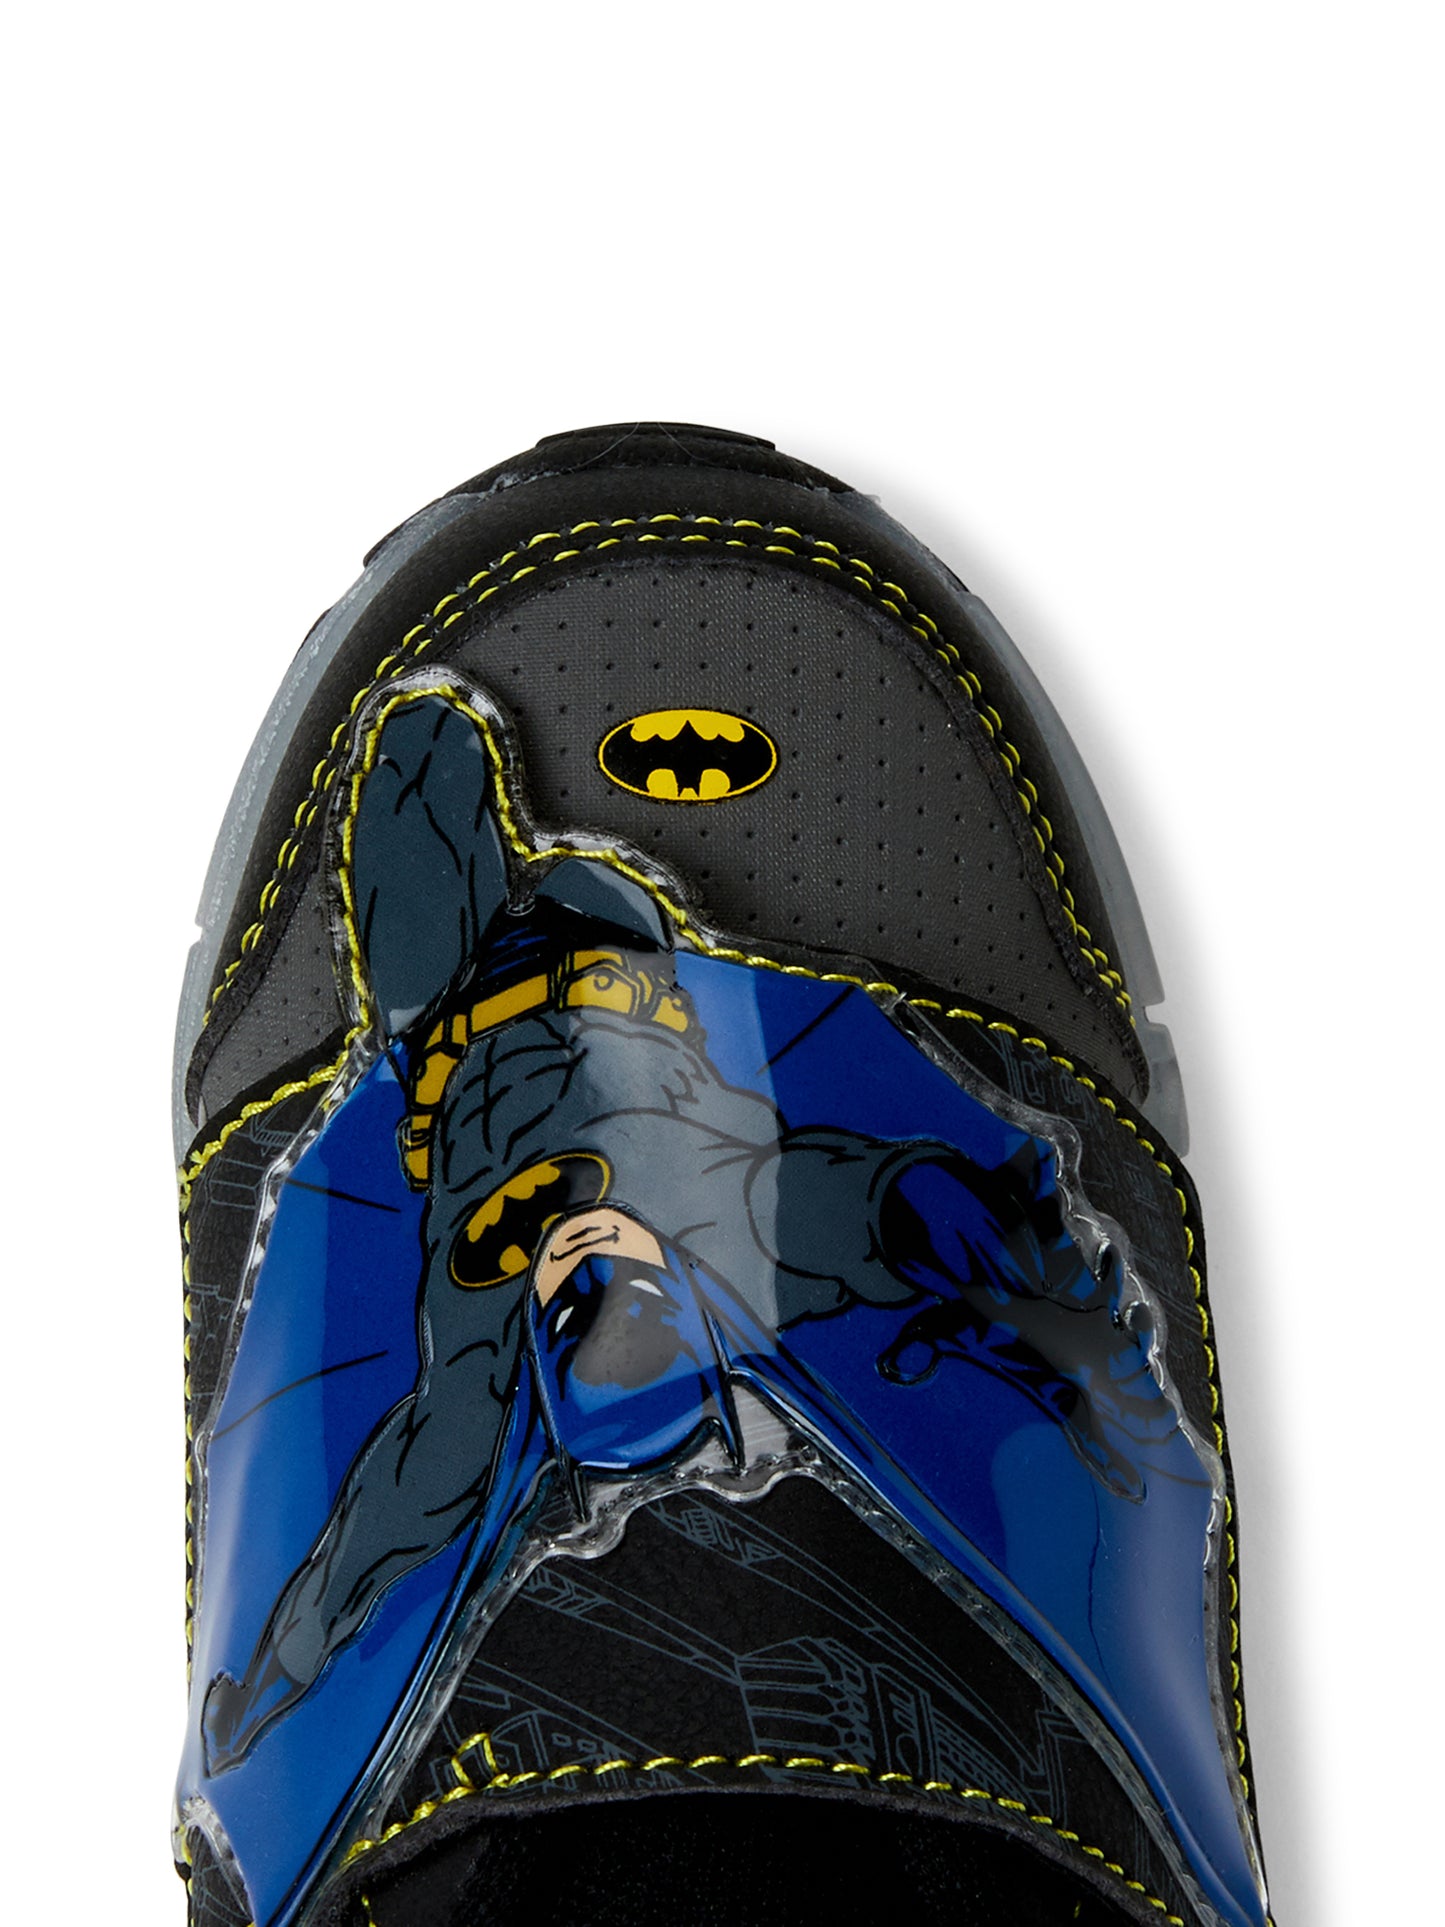 Batman Boys Light Up Sneakers - Black/Blue